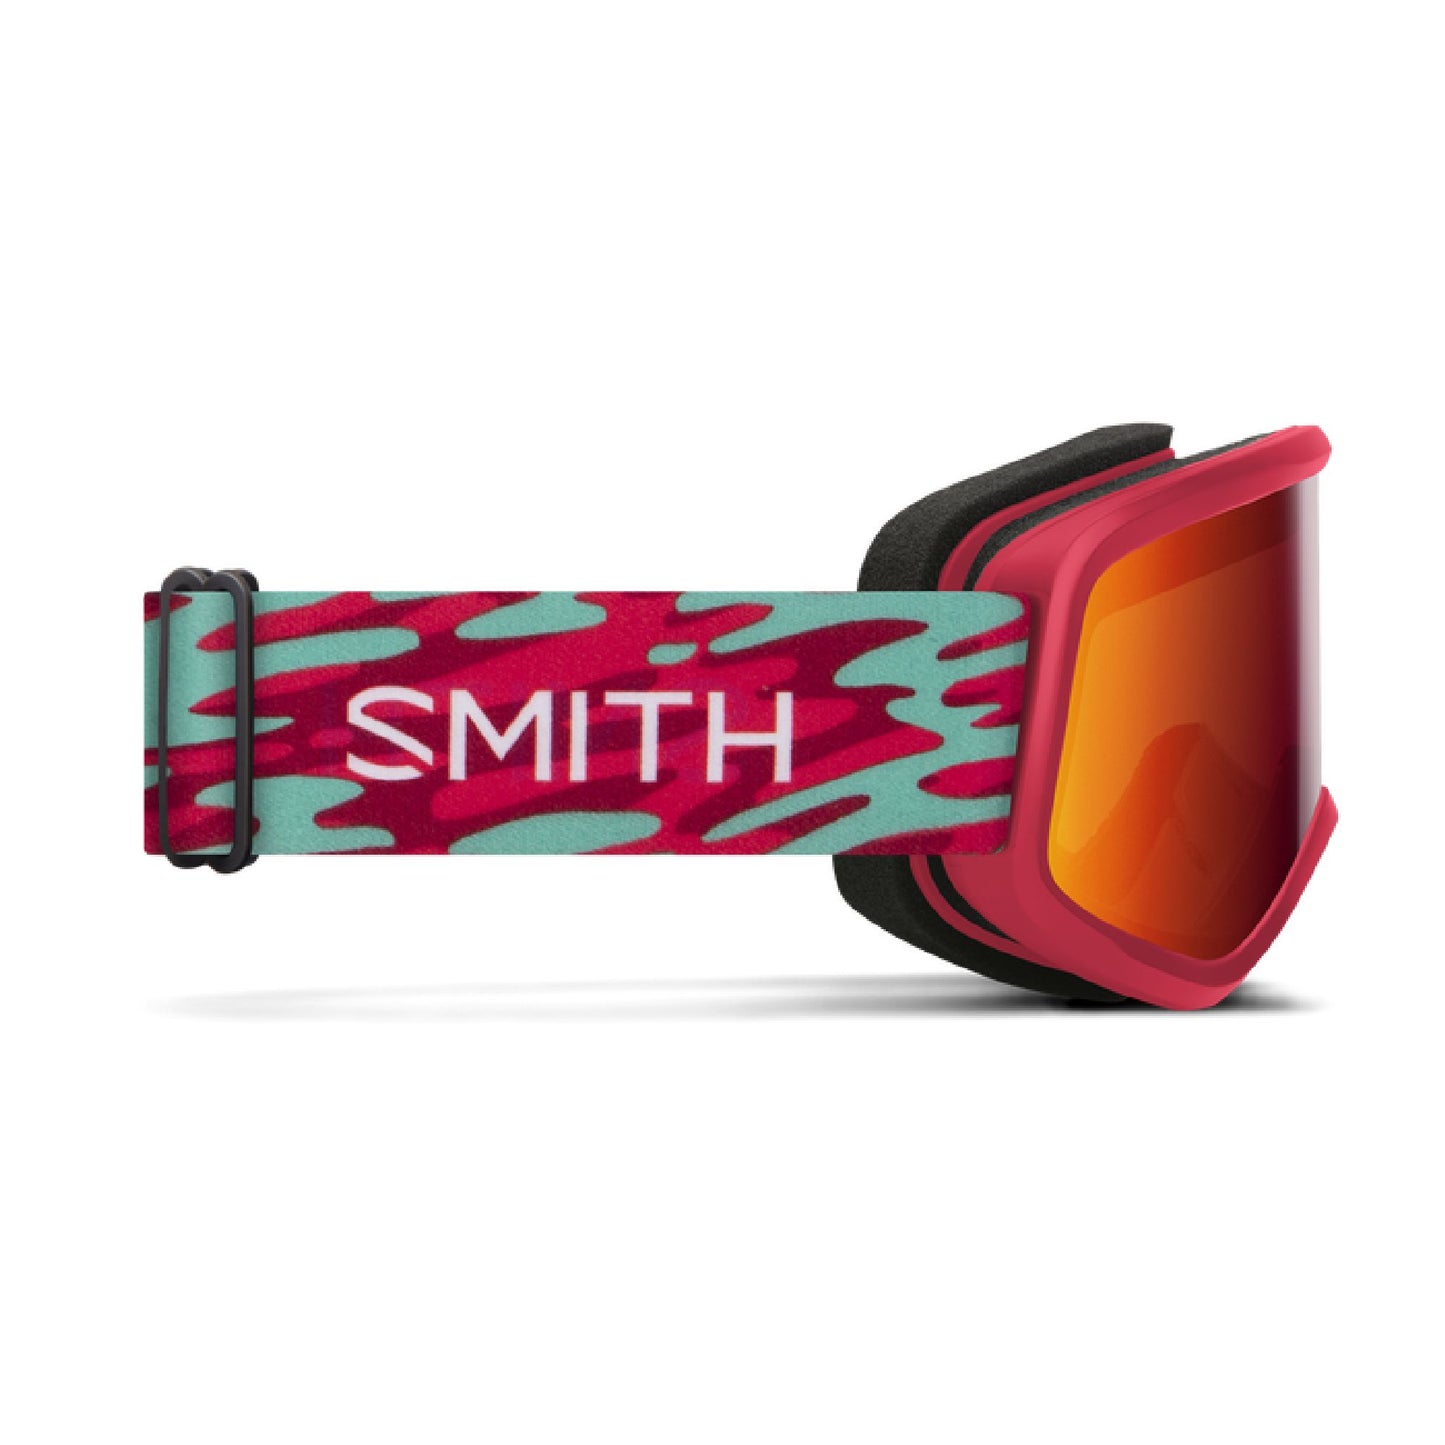 Smith Kids' Snowday Snow Goggle Crimson Swirled Red Sol-X Mirror Snow Goggles